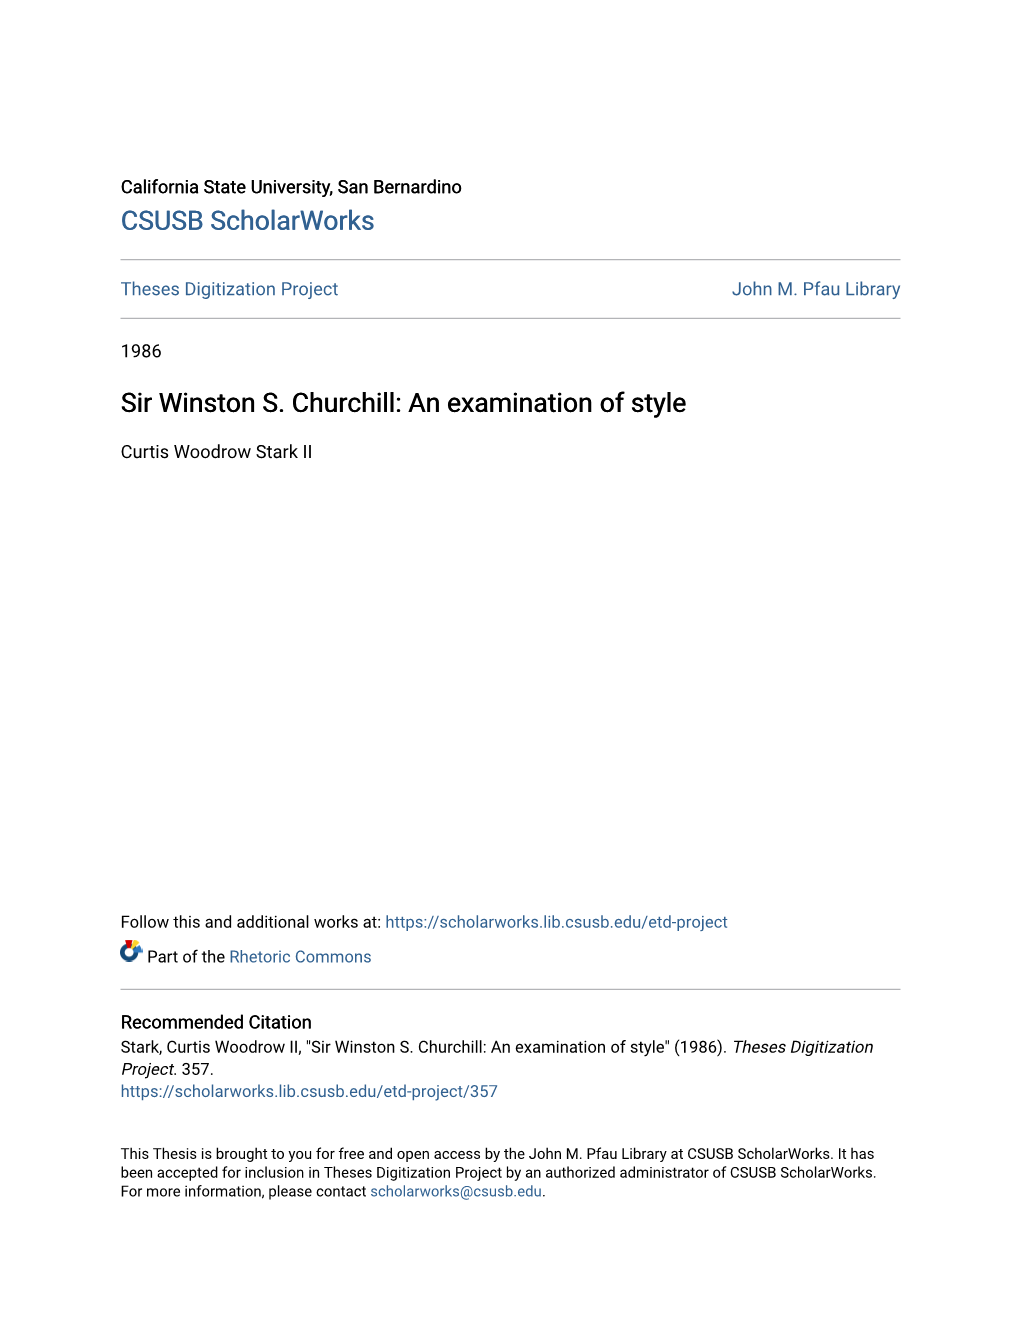 Sir Winston S. Churchill: an Examination of Style